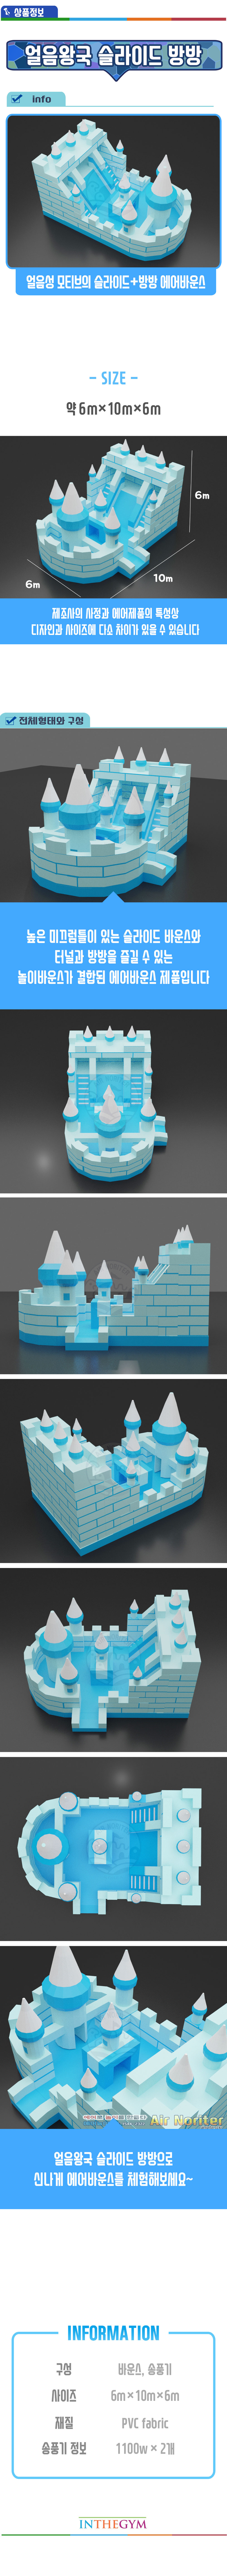 Ice-Kingdom-Slides_shop1_164229.jpg